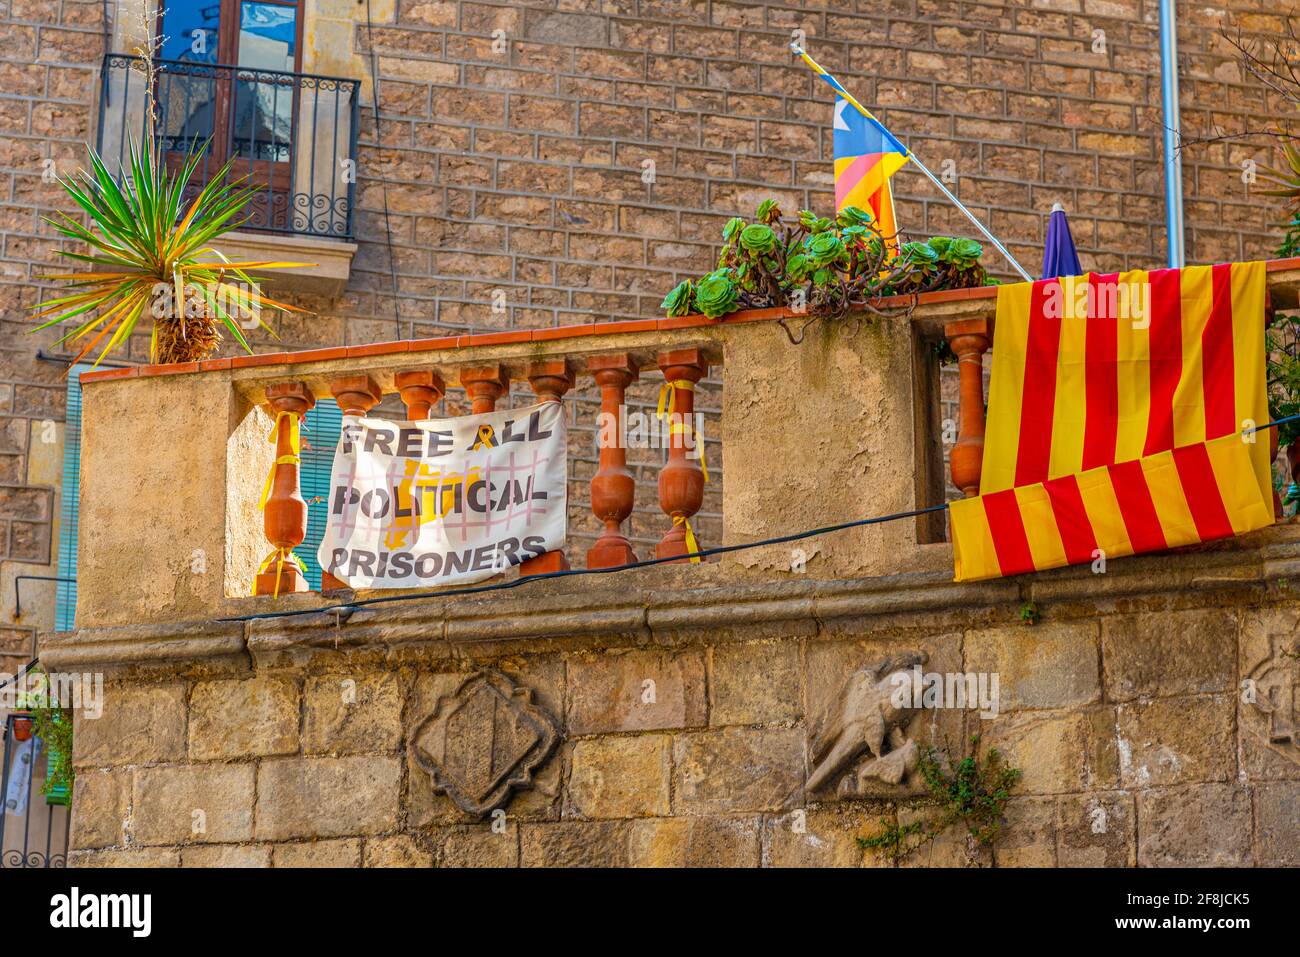 BARCELONA, SPANIEN, 29. JUNI 2019: Banner fordert Freilassung politischer Gefangener in Barcelona, Spanien Stockfoto